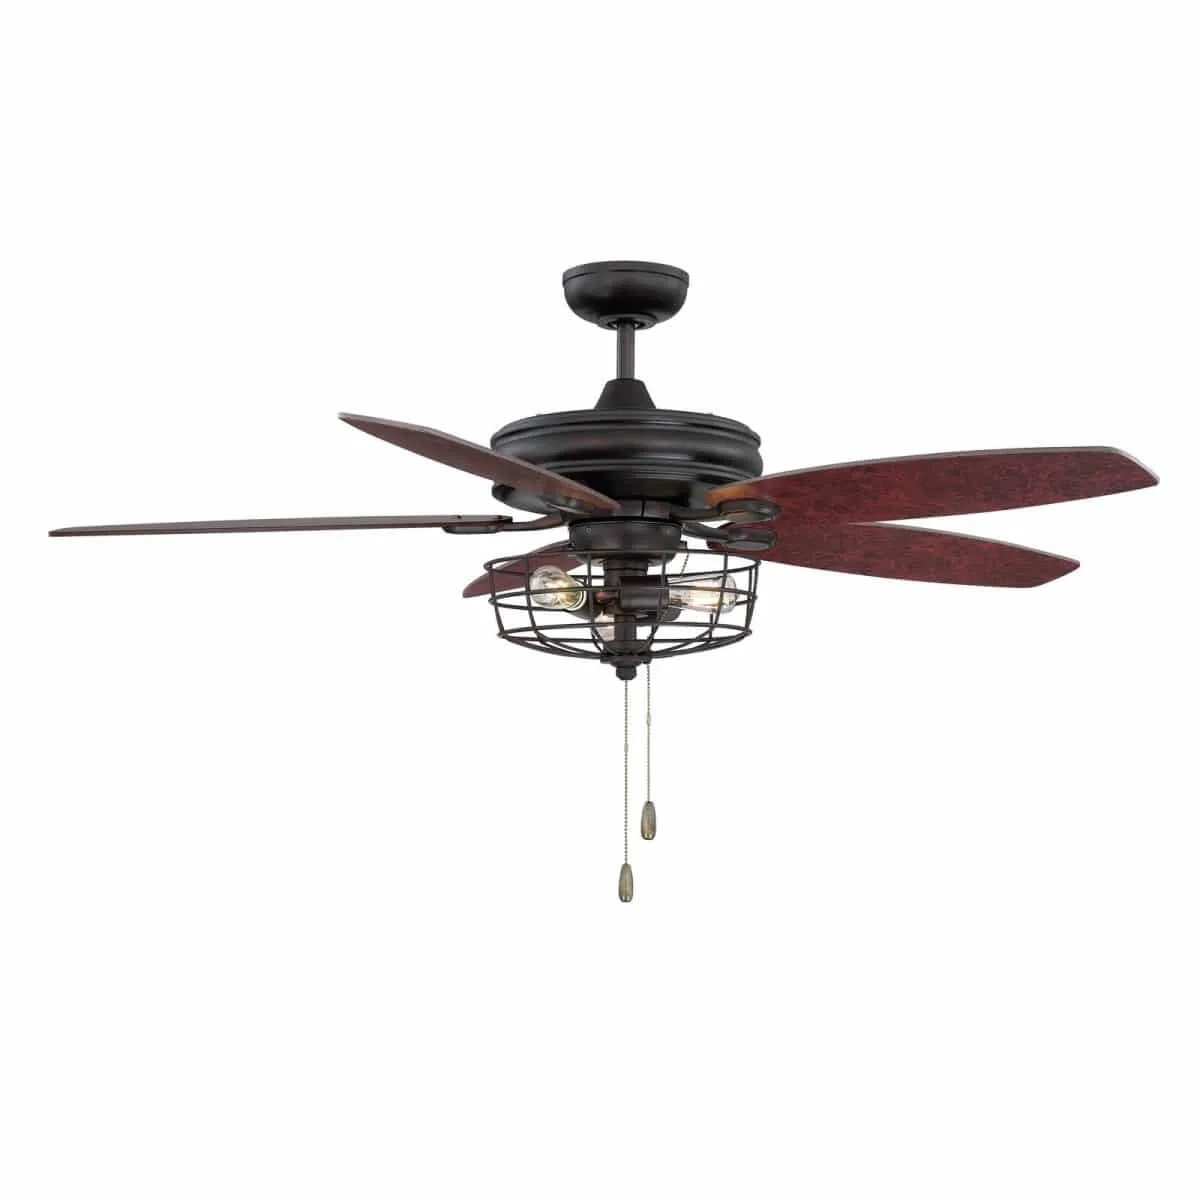 Affordable farmhouse ceiling fans 52" Glenpool 5 blade ceiling fan metal rustic light